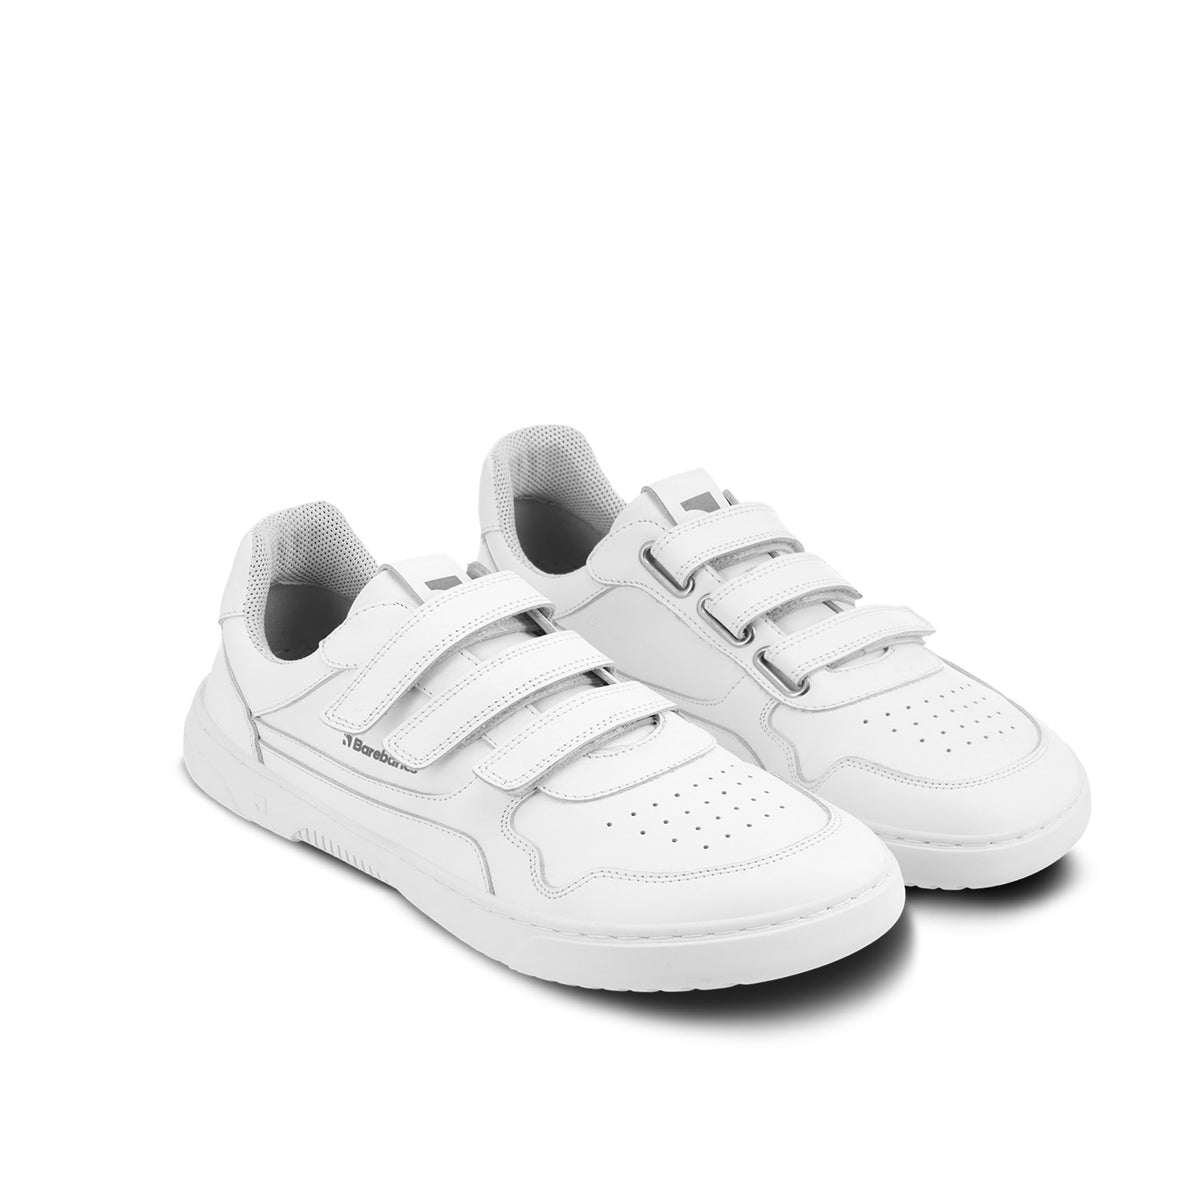 Barefoot Sneakers Barebarics Zing Velcro - All White - Leather 4  - OzBarefoot